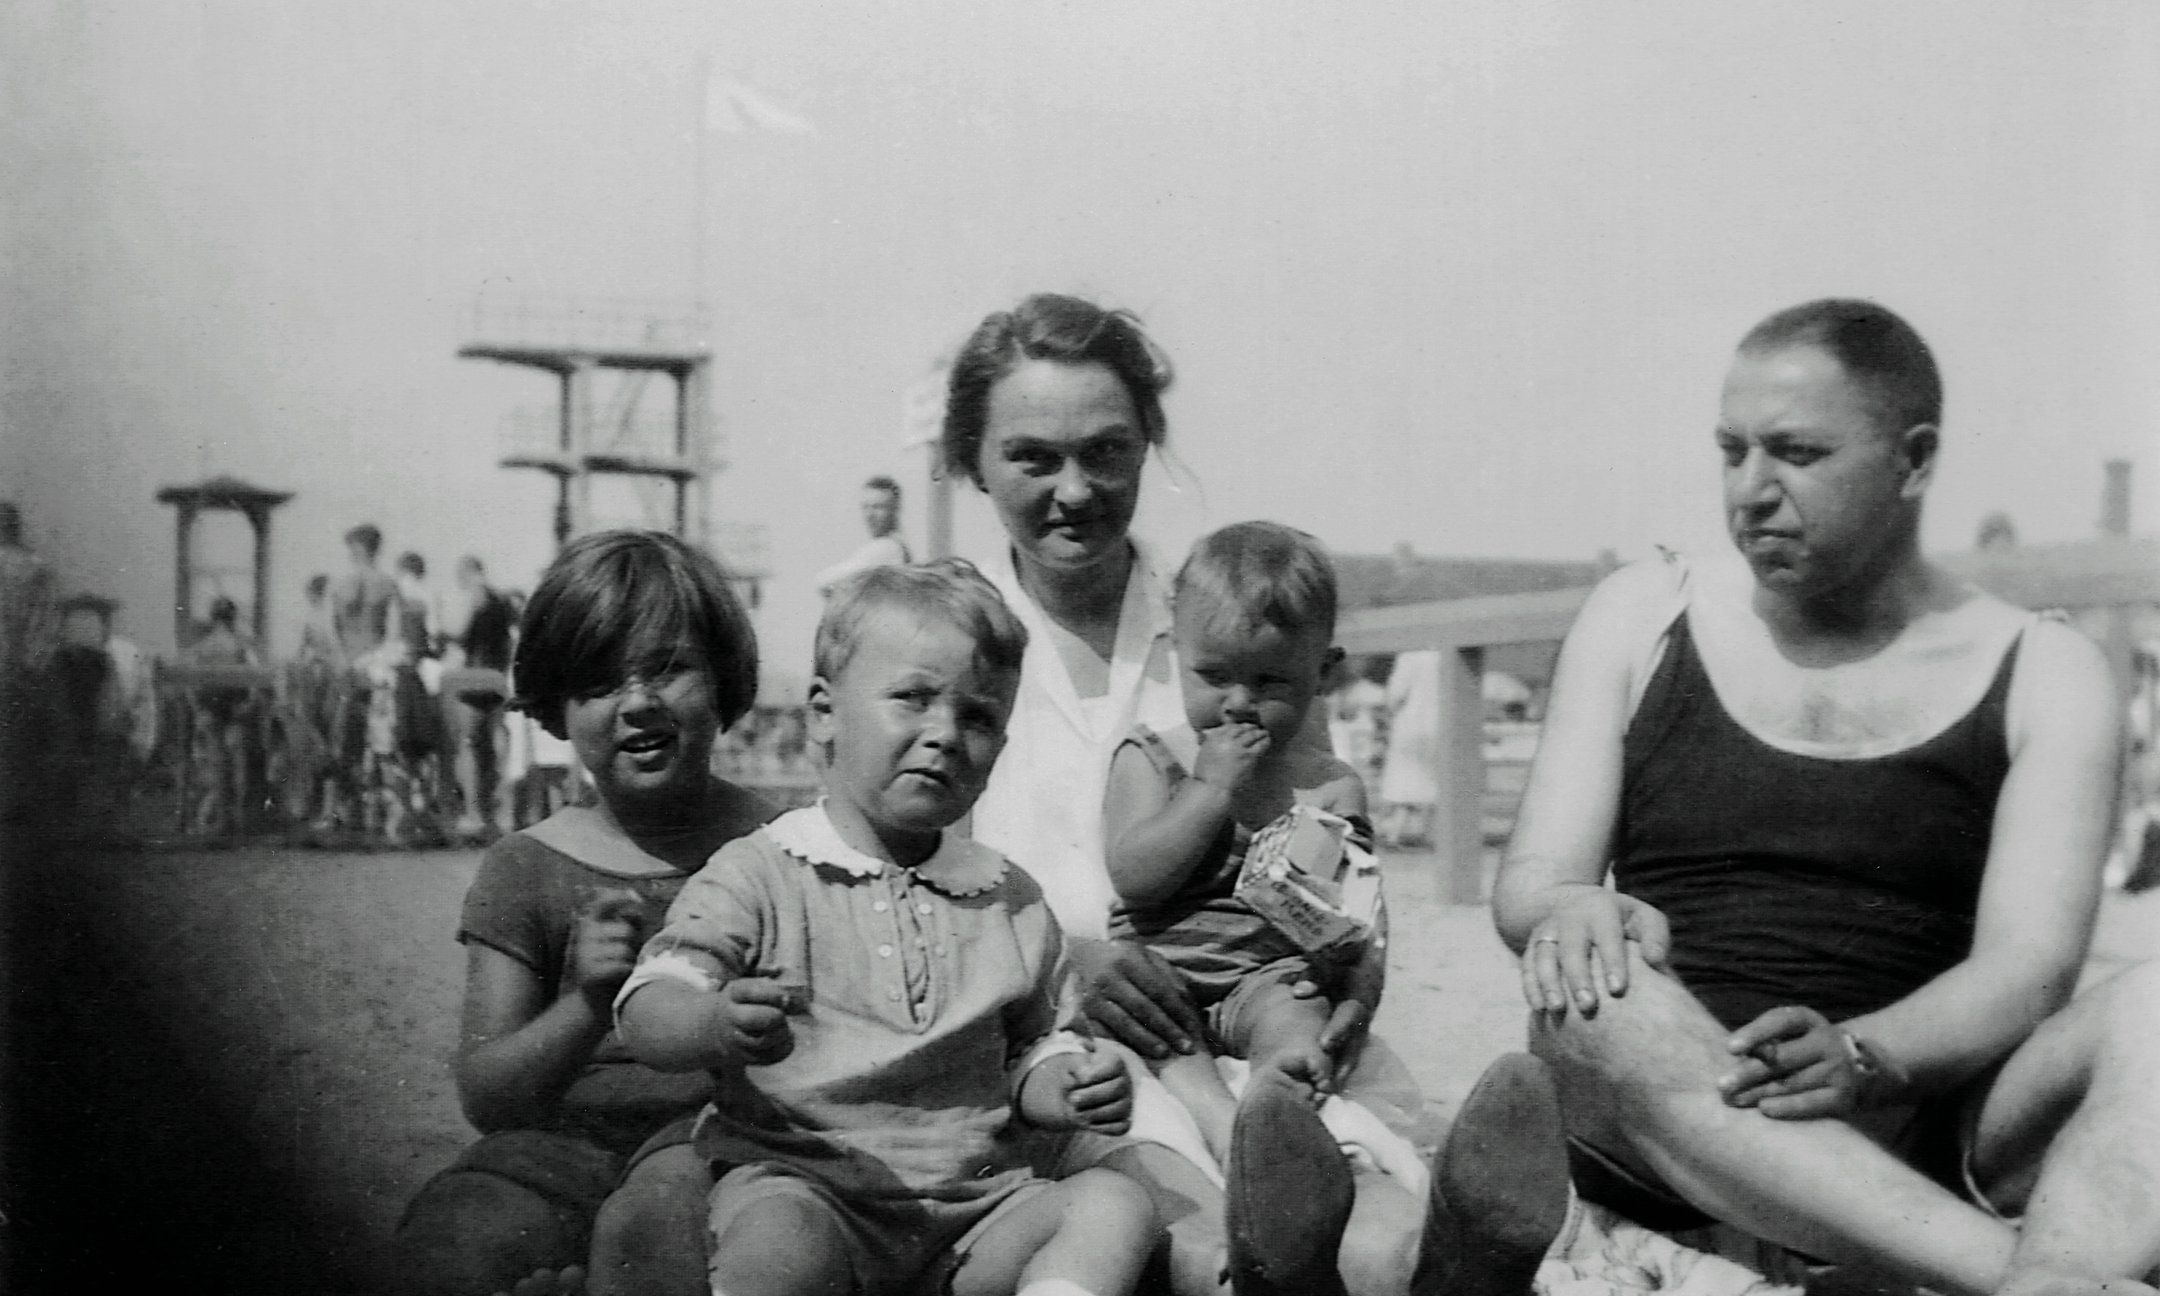 Peter van Pels am Strand mit der Familie Jacobson, um 1927. V.l.n.r. Elsa Jacobson, Peter van Pels, Maria (Kindermädchen) mit Ralph Jacobson auf dem Schoß, Vater Ernst Jacobson.